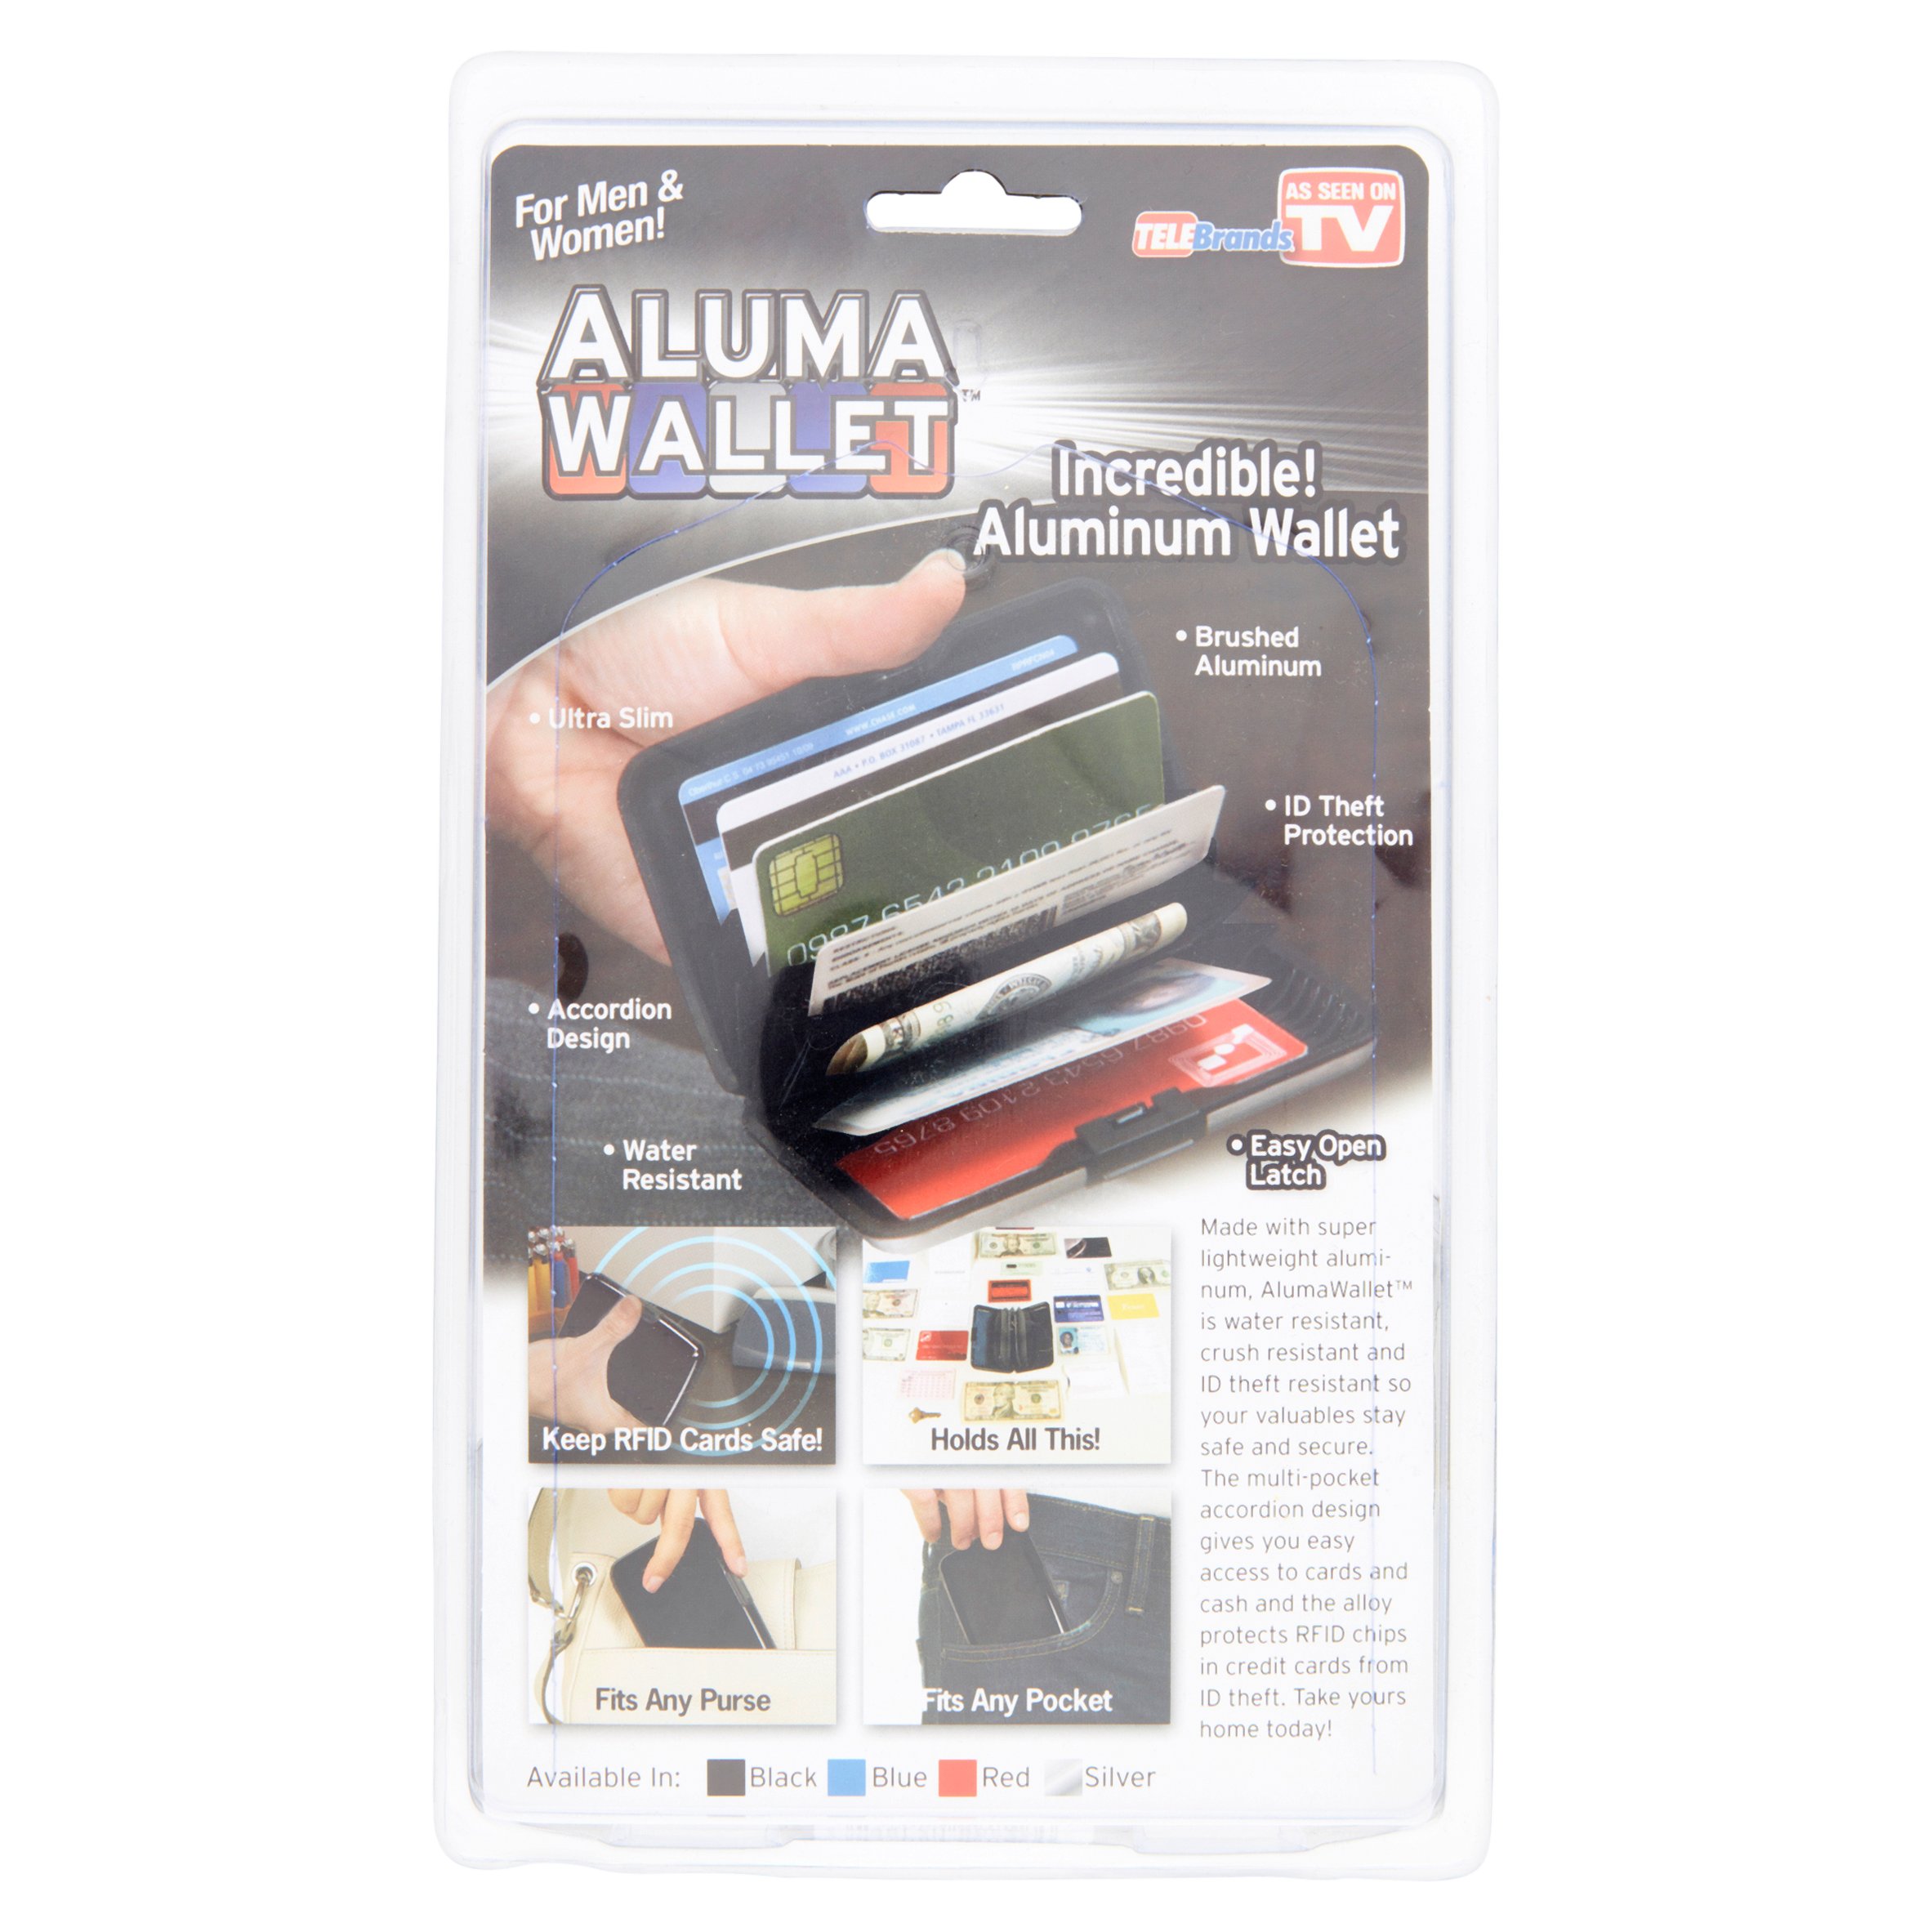 Aluminum Wallet for Men & Women - image 4 of 5